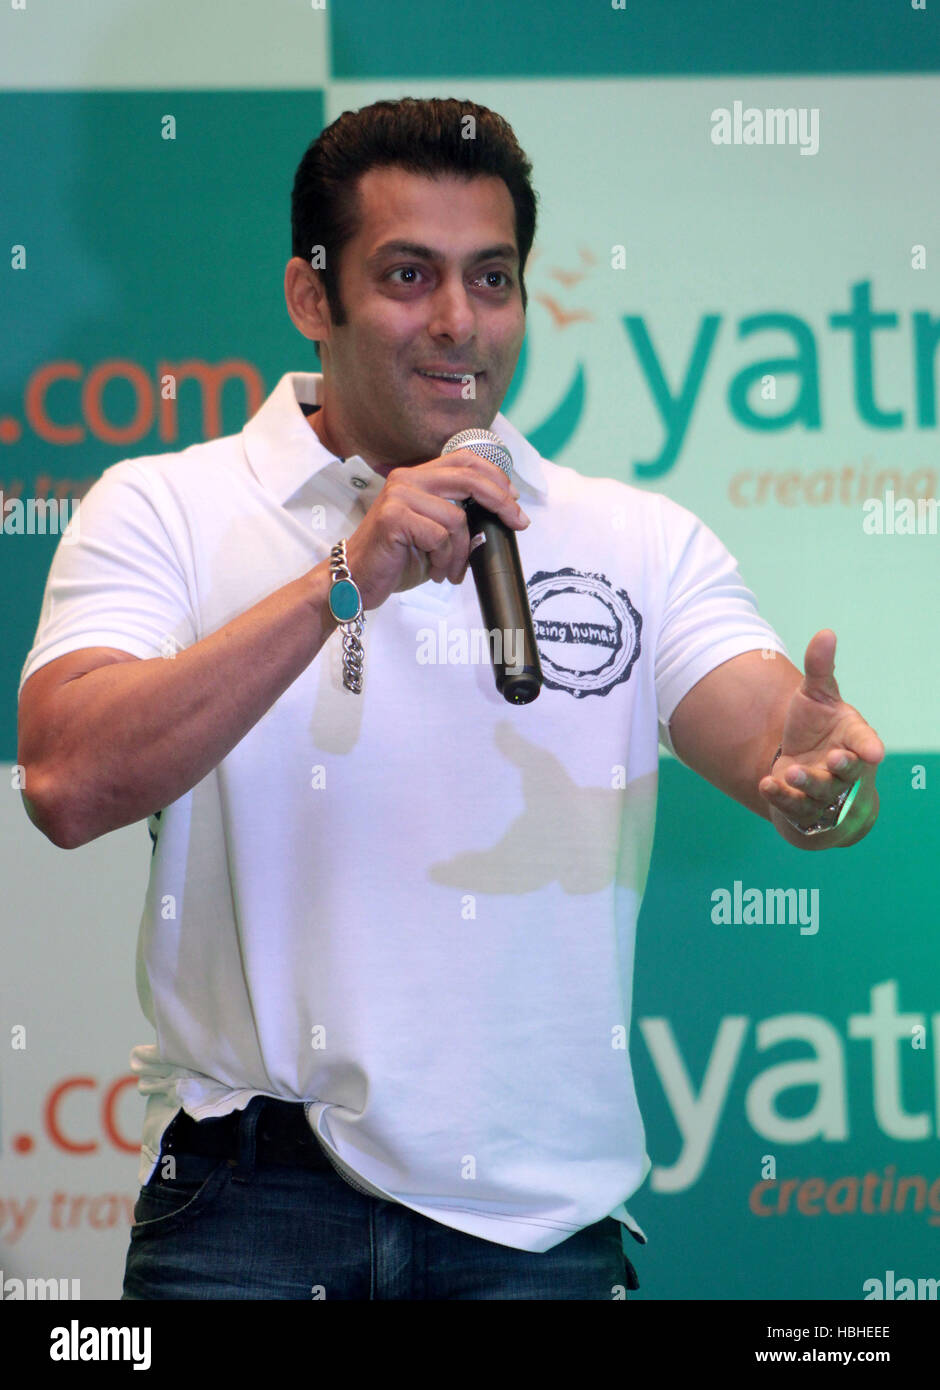 Salman Khan, Indian Bollywood actor speaking during a function announced brand ambassador shareholder Yatra.com Mumbai India Stock Photo